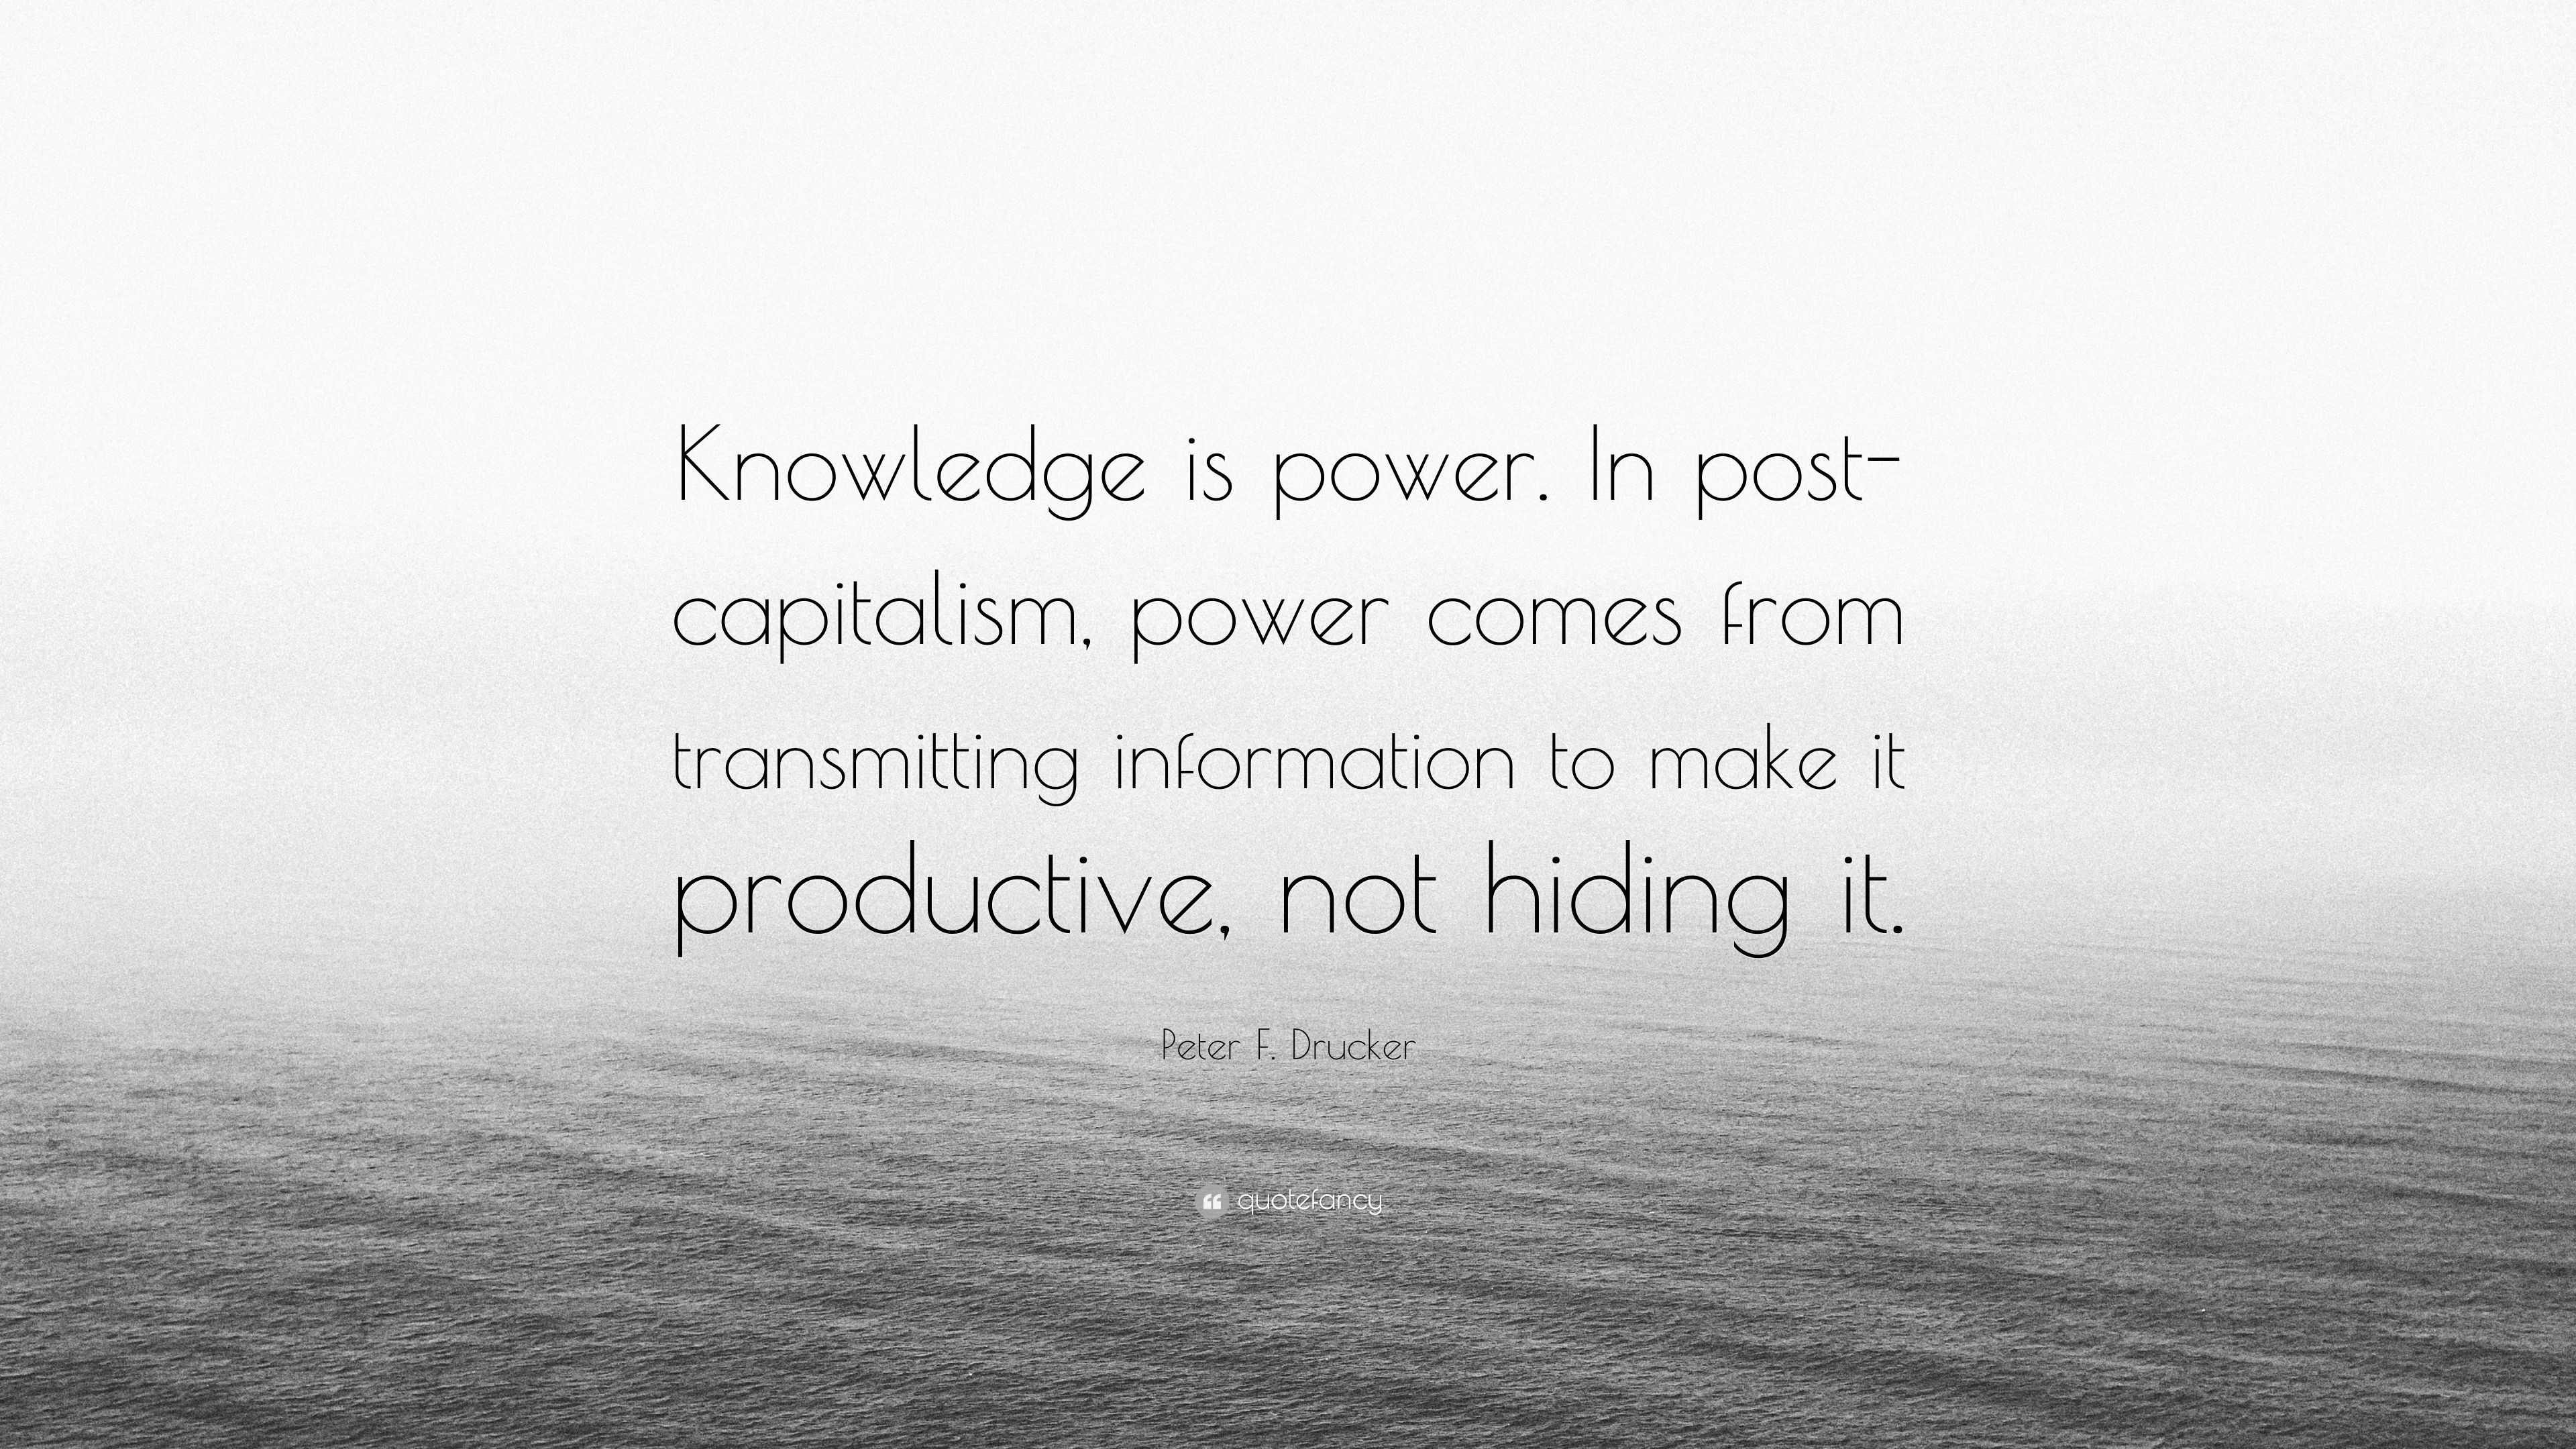 knowledge is power monochrome